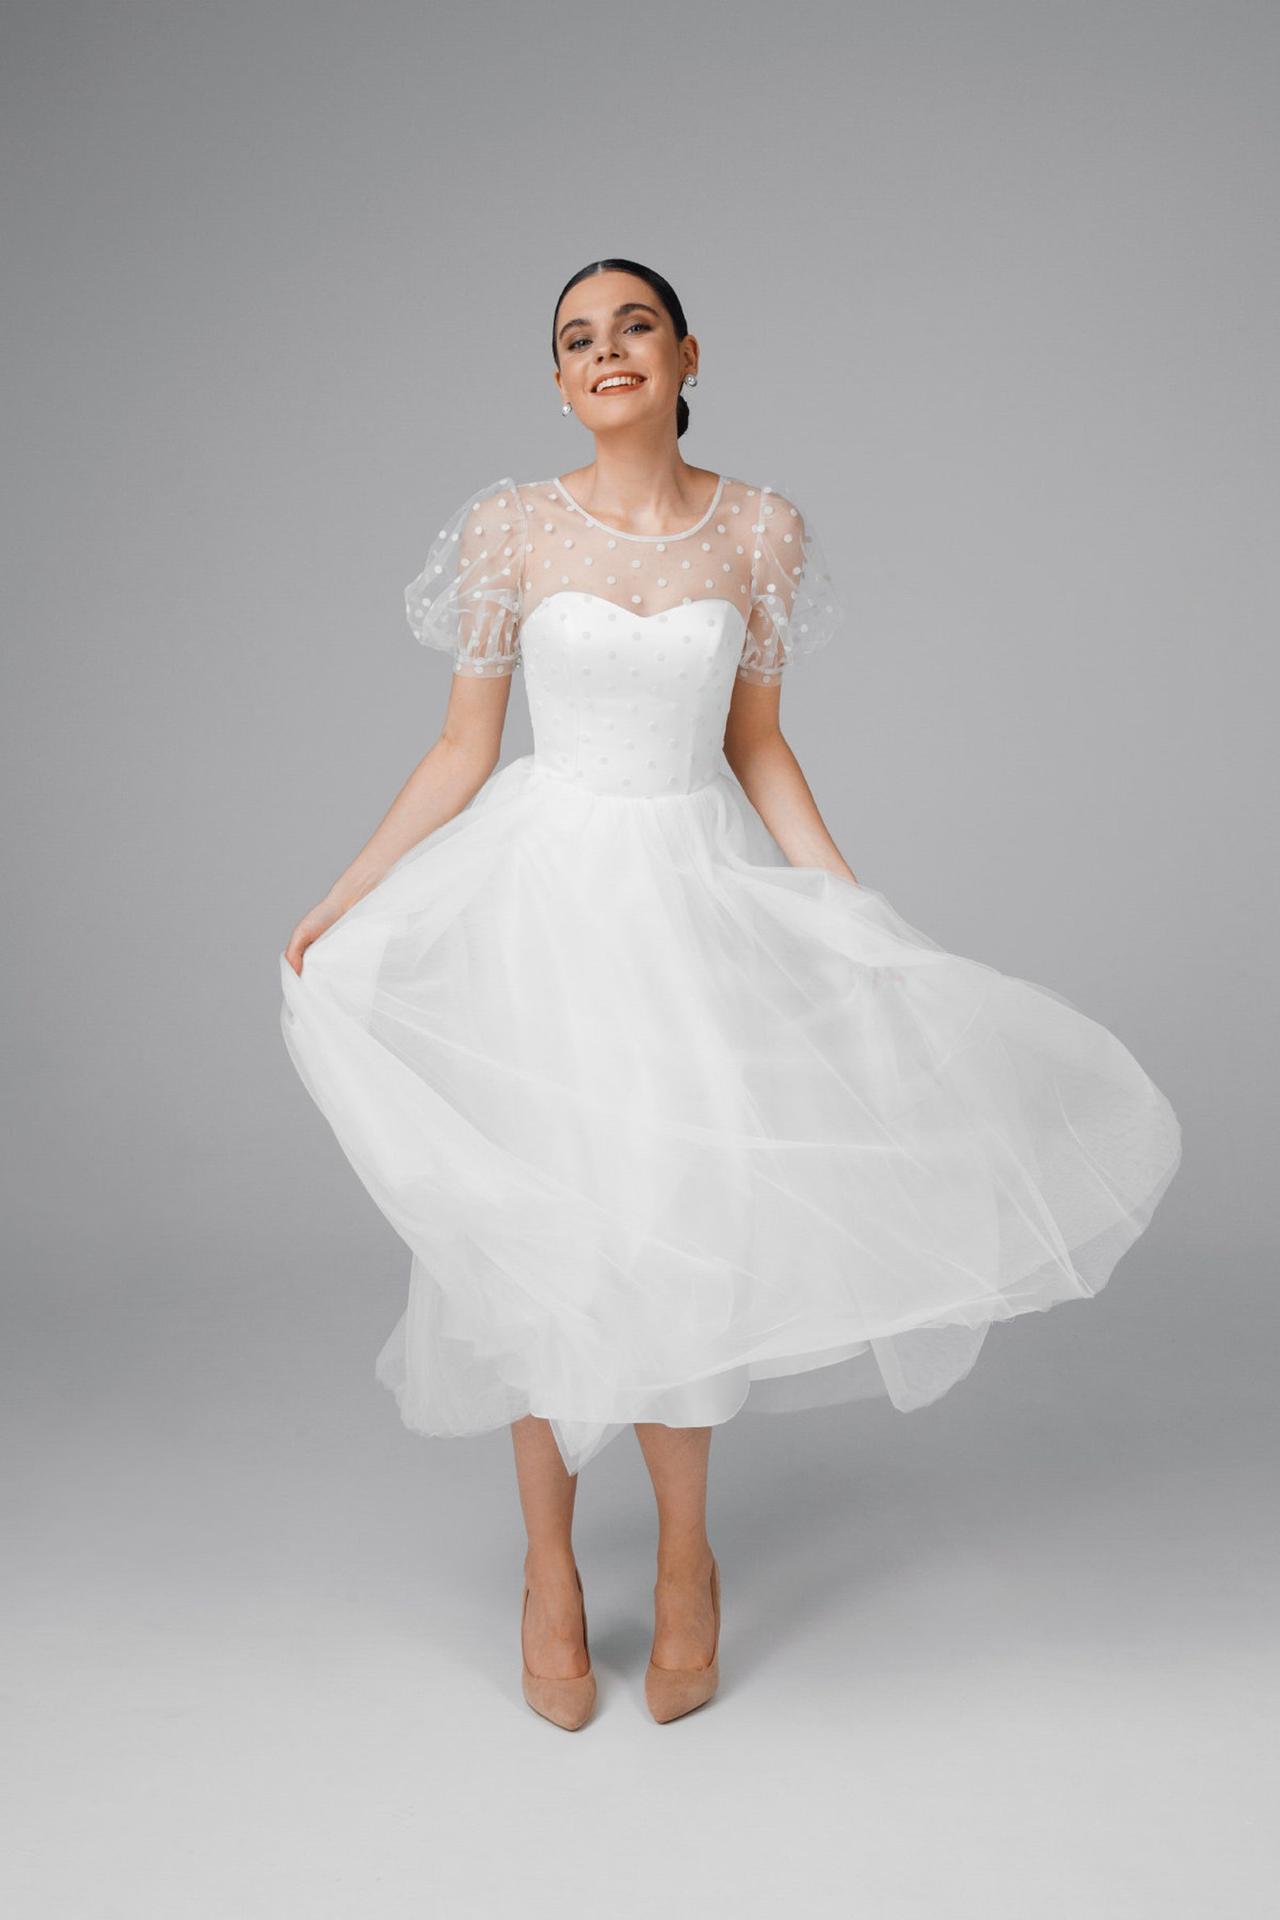 tea length wedding dress with tulle skirt and puffed polka dot short sleeves